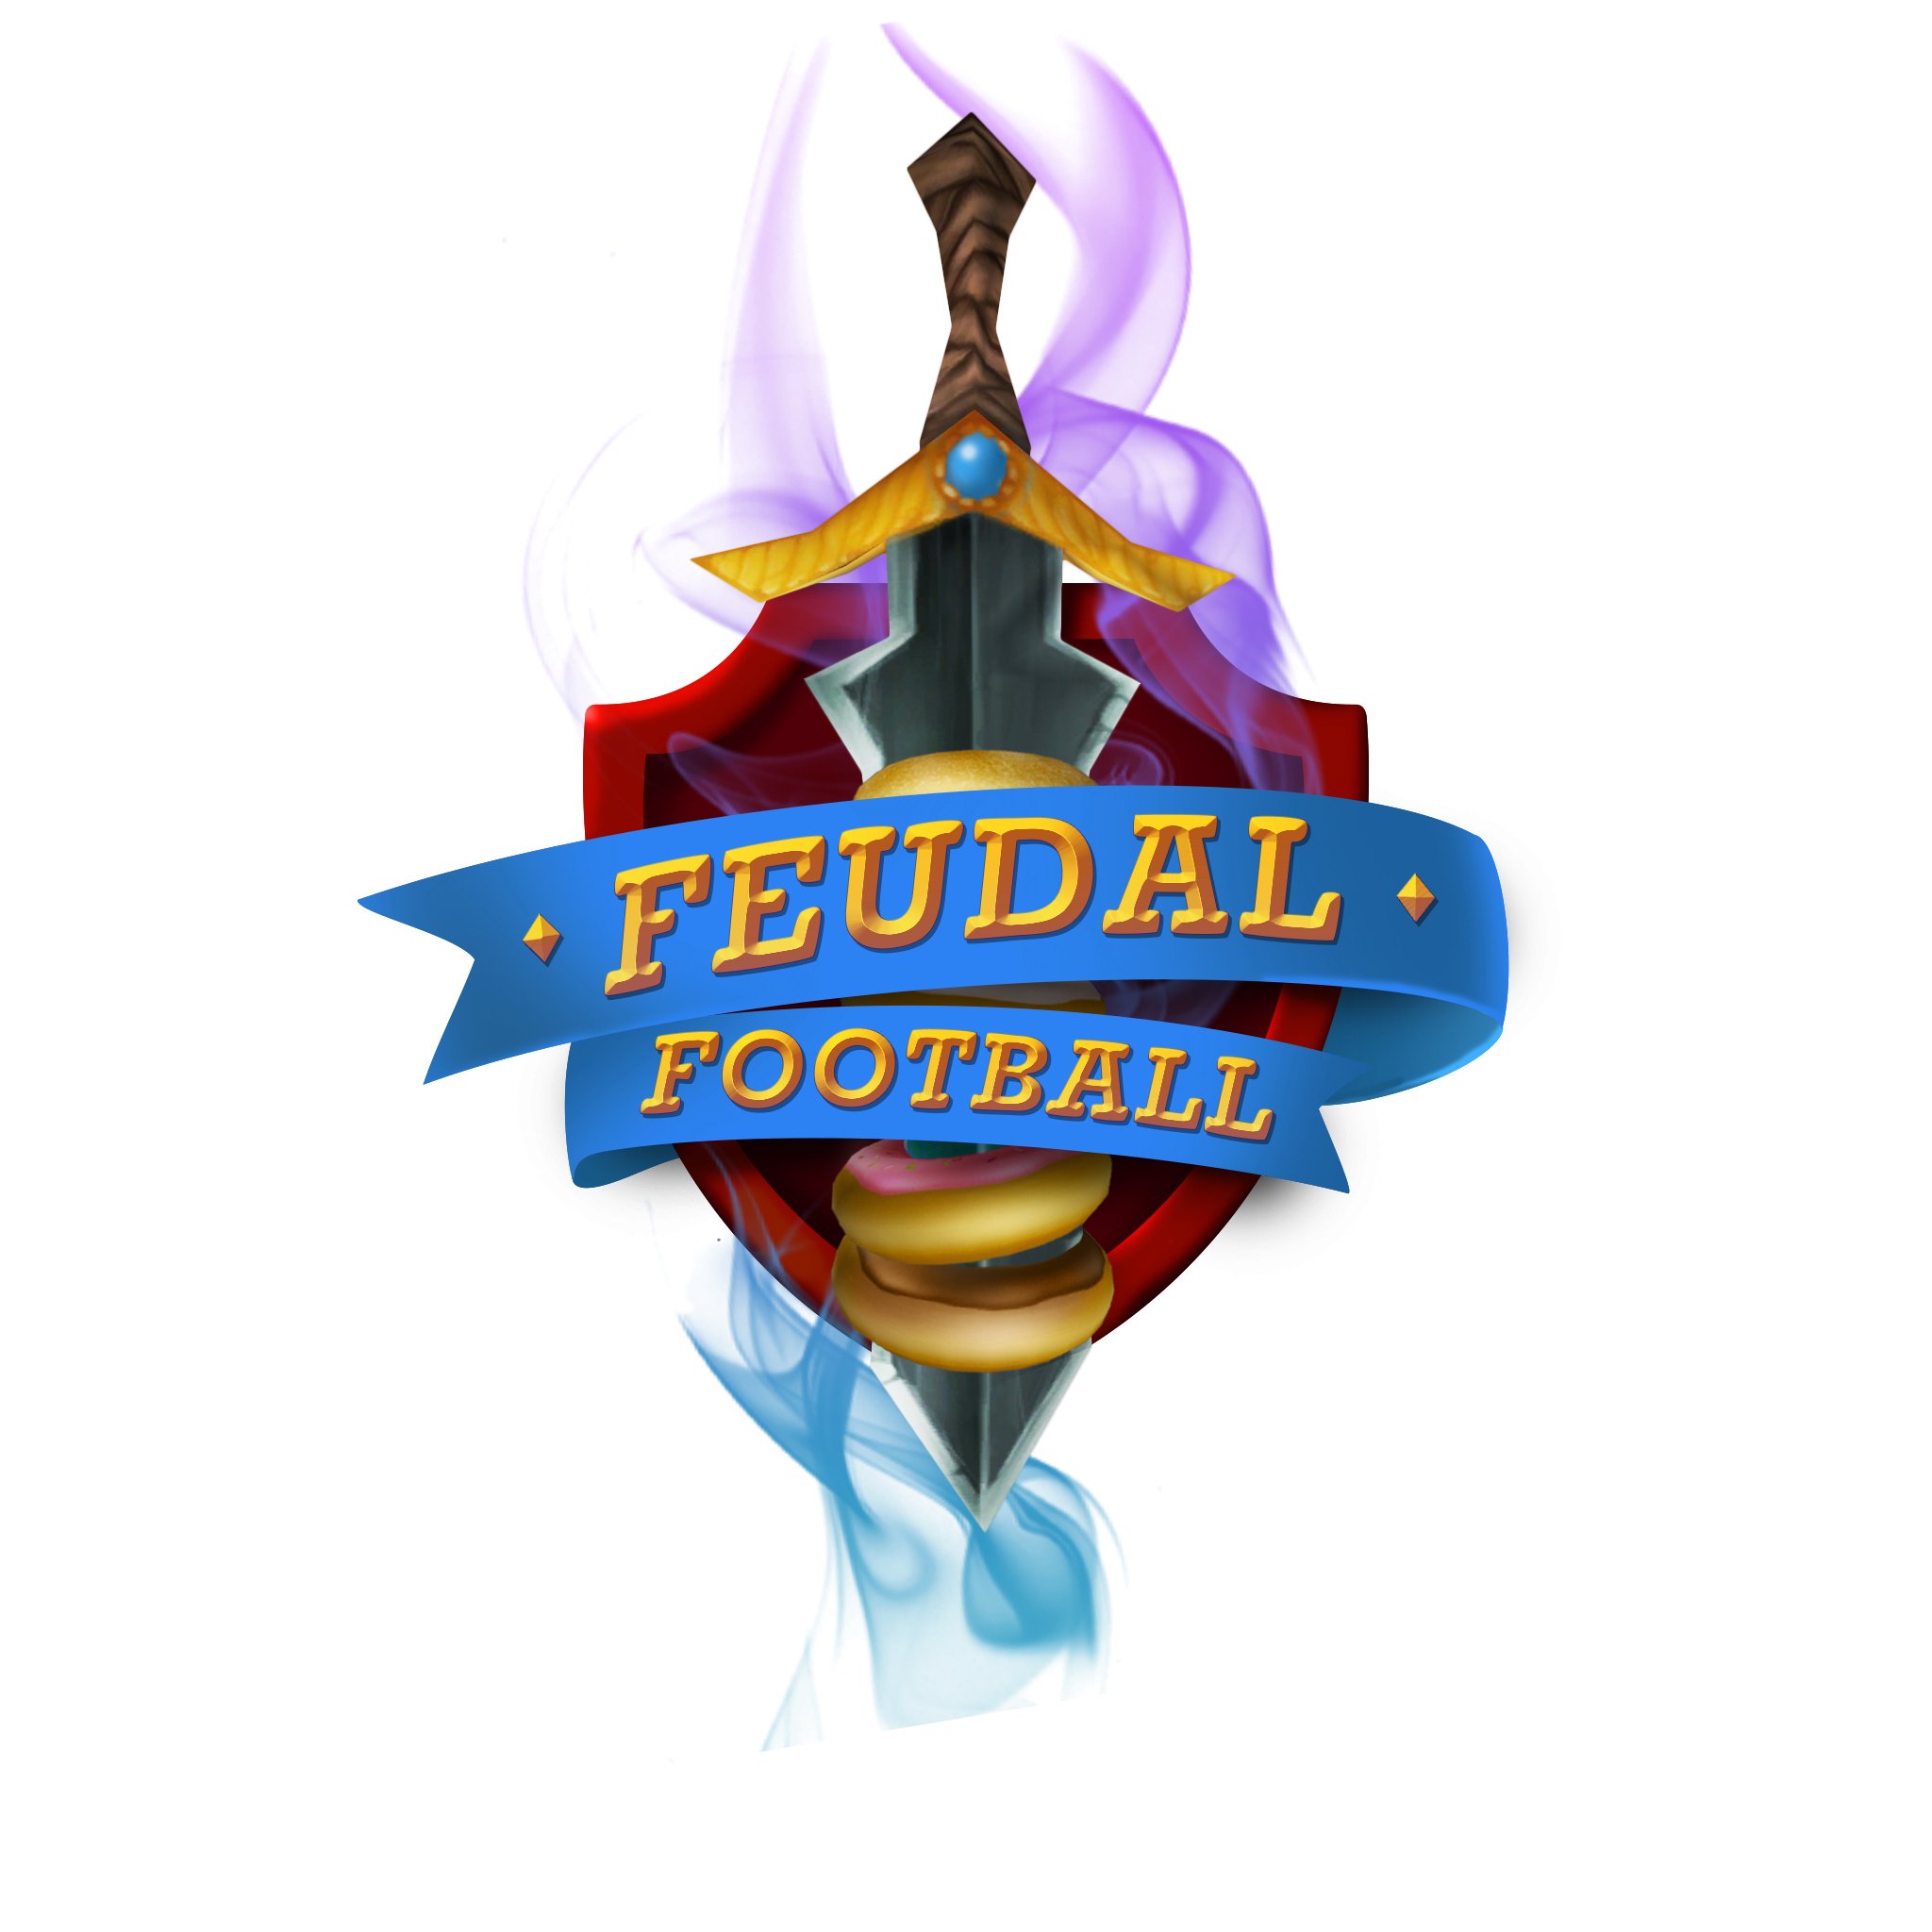 Trademark Logo FEUDAL FOOTBALL